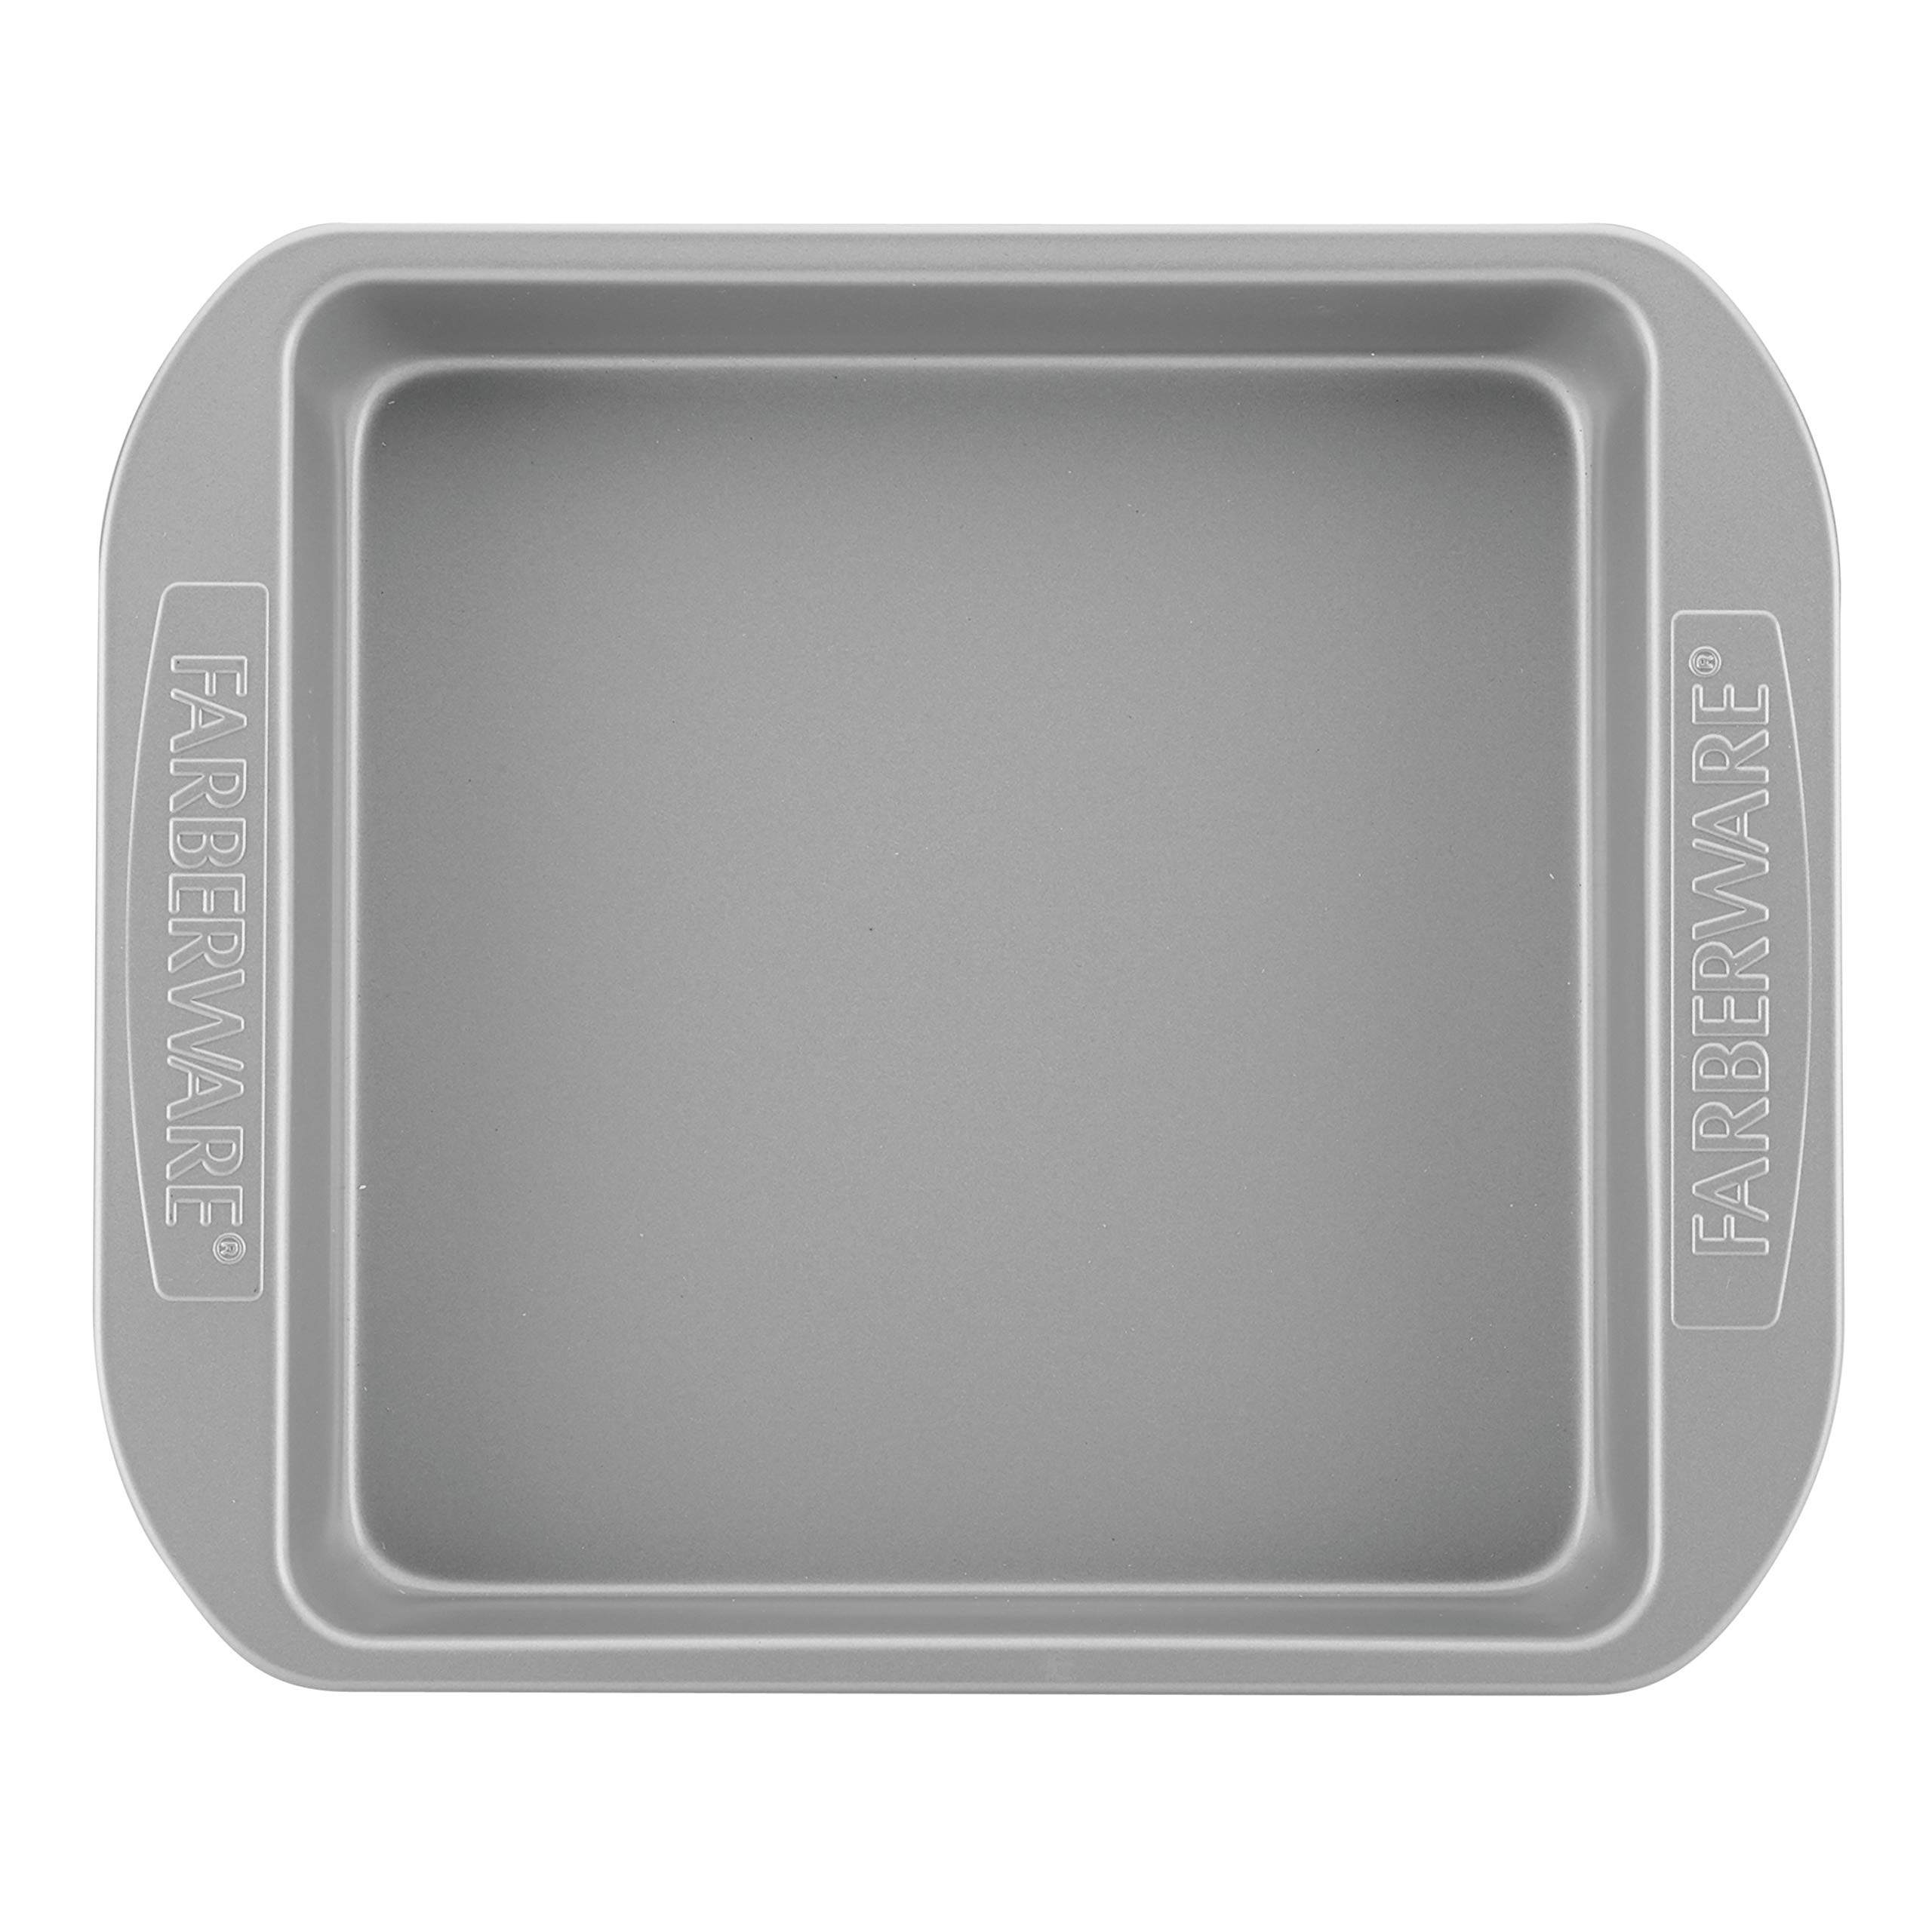 Farberware Nonstick Bakeware Nonstick Baking Pan / Nonstick Cake Pan, Square - 9 Inch, Gray